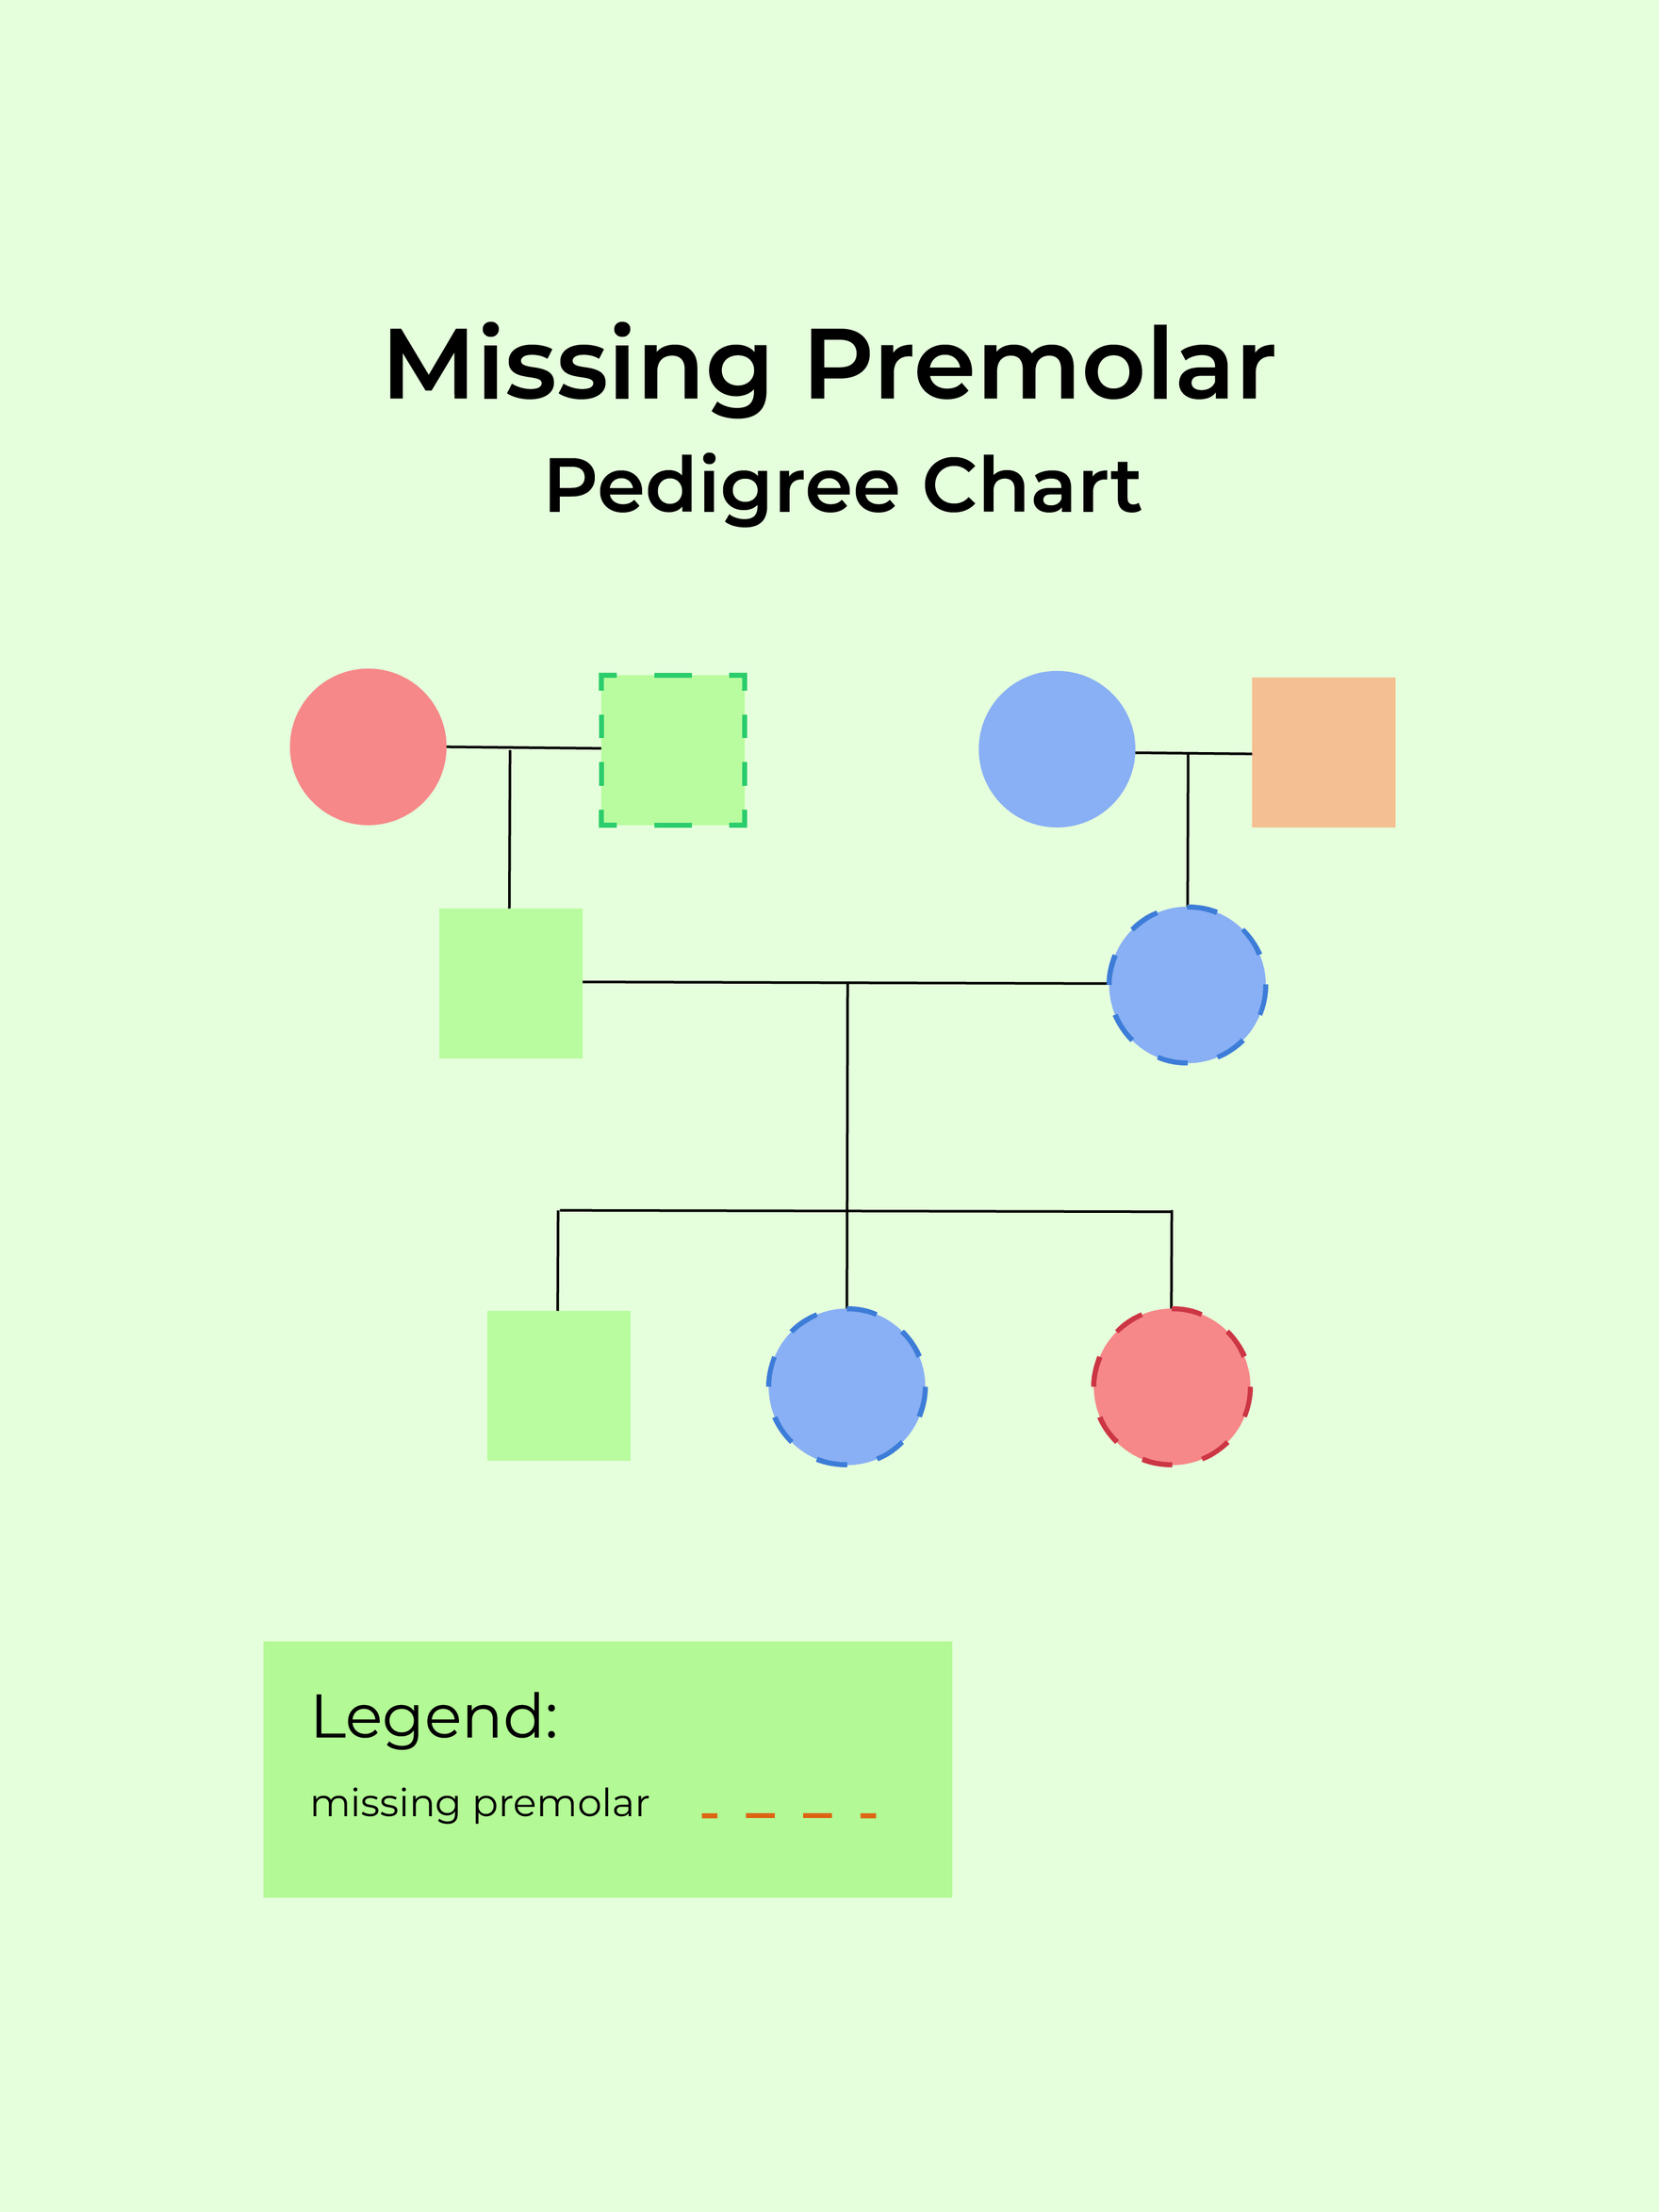 Missing Premolar Pedigree Chart